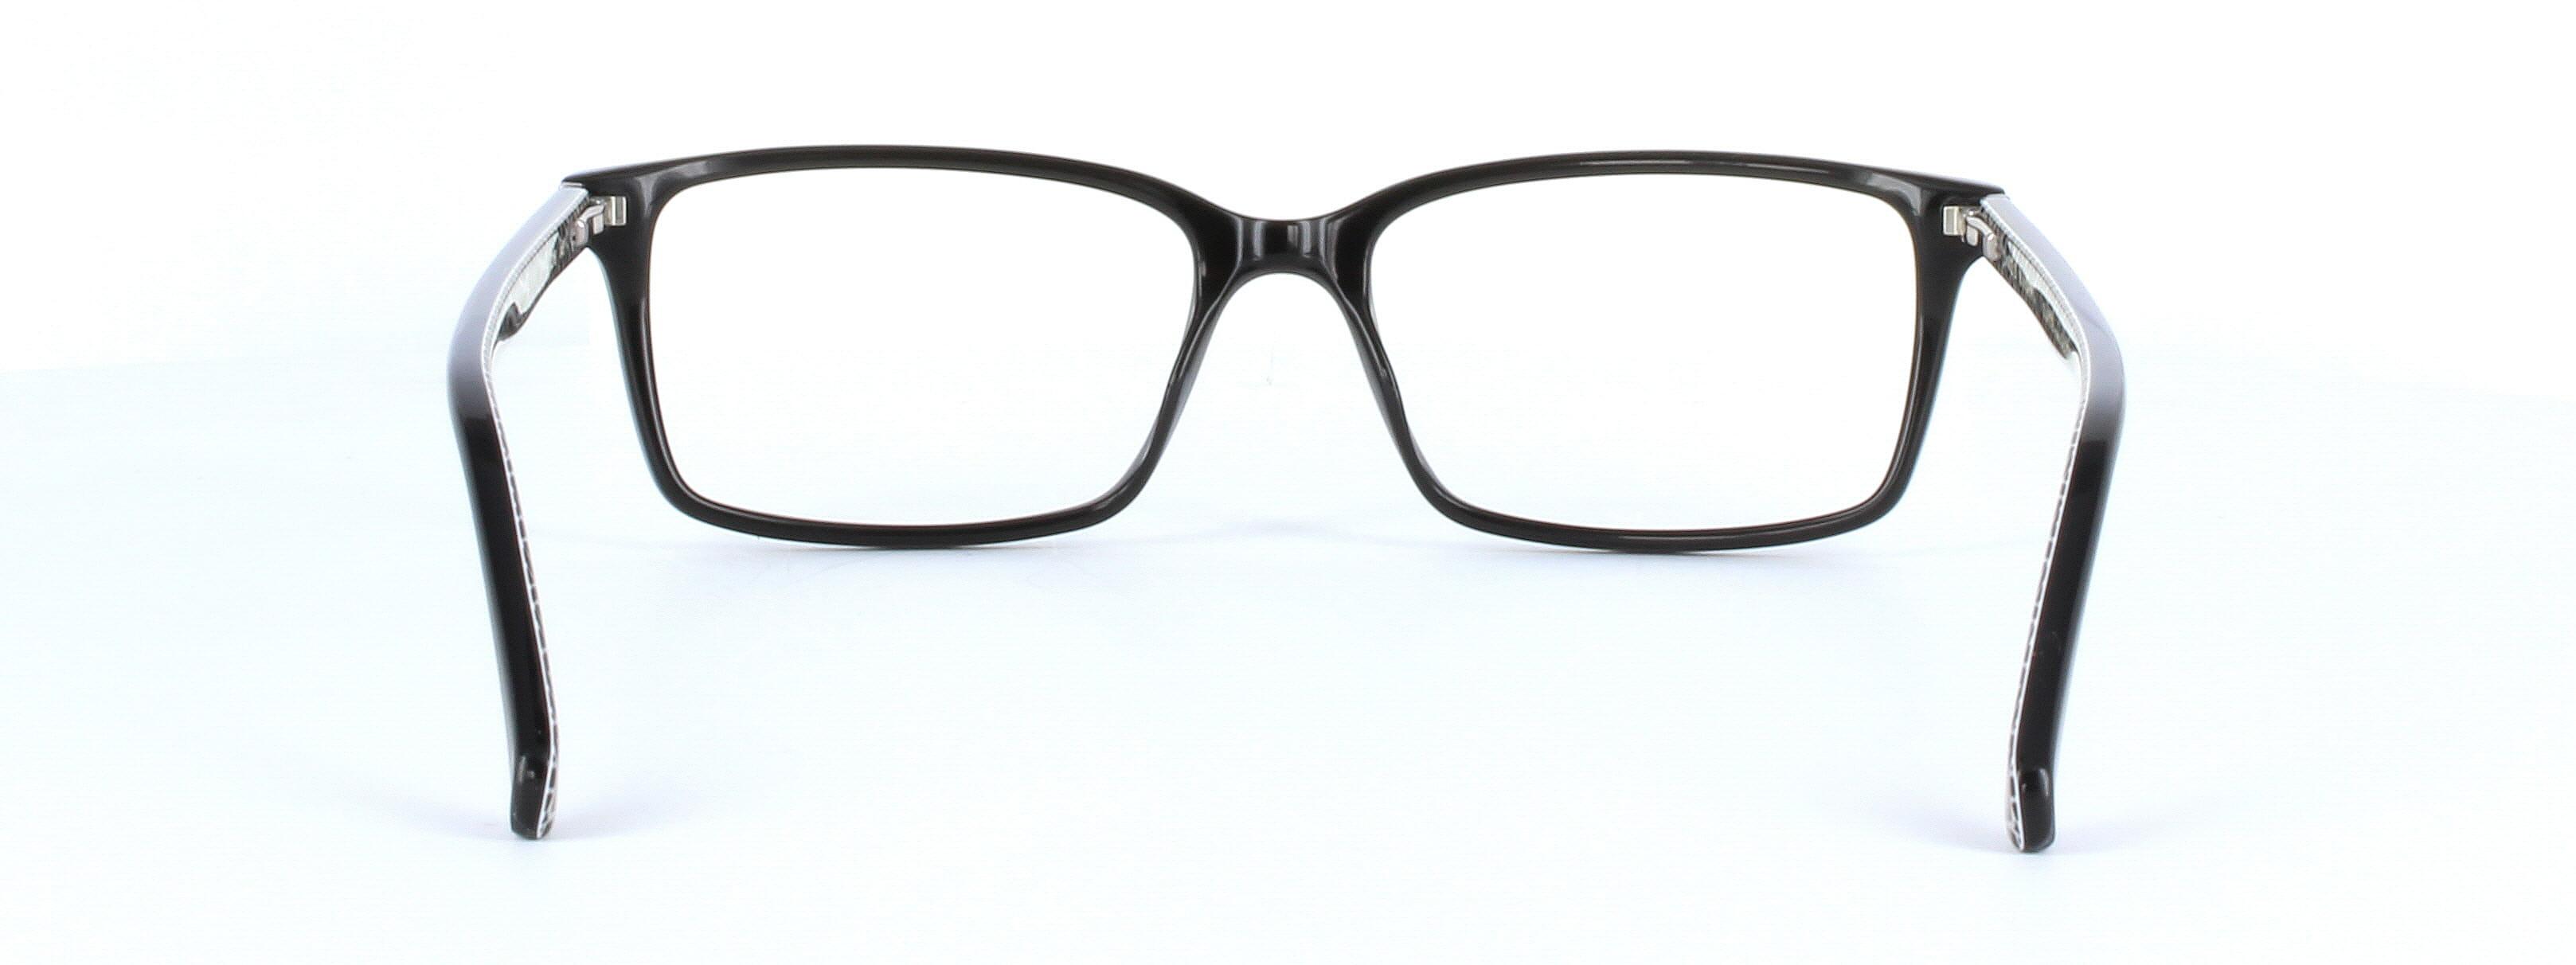 Ted Baker Nolan in black - unisex acetate designer glasses by Police - image view 3